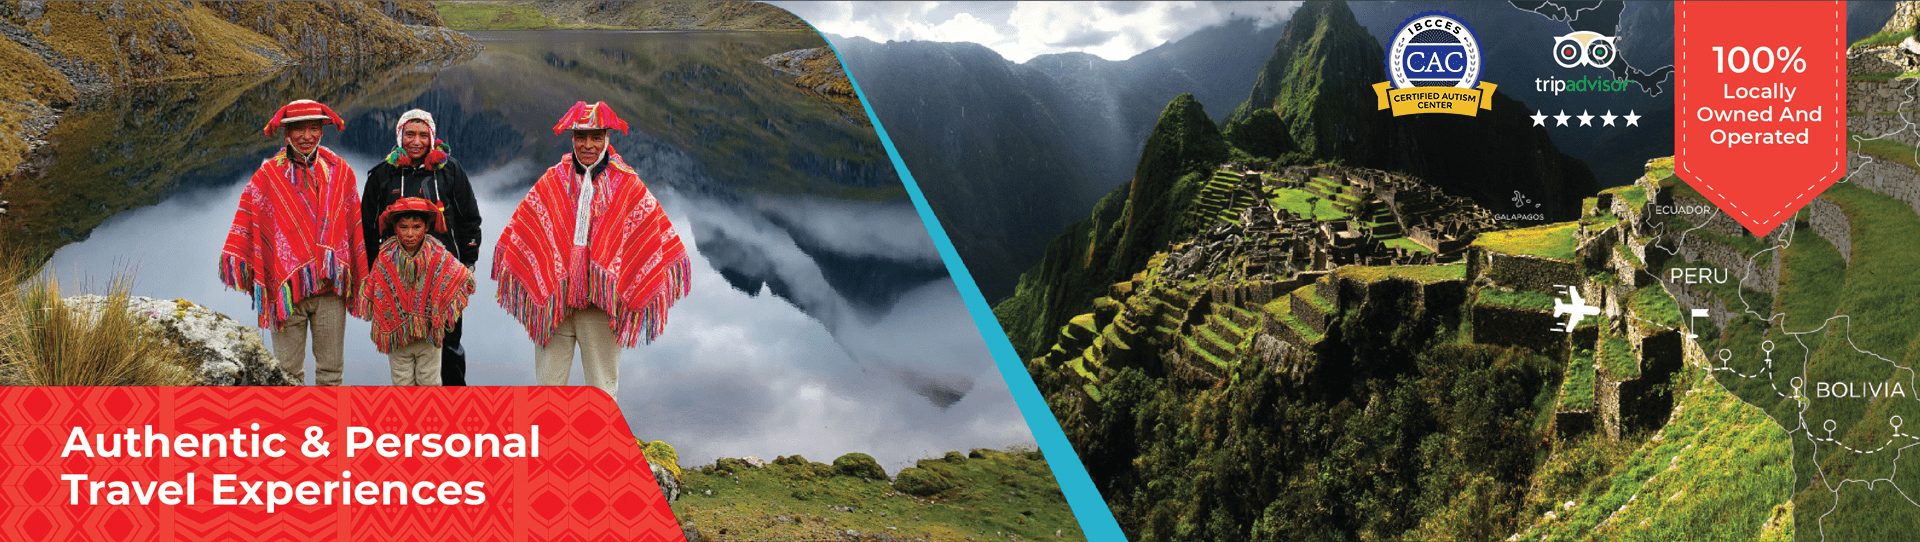 Juve-Travel-Peru